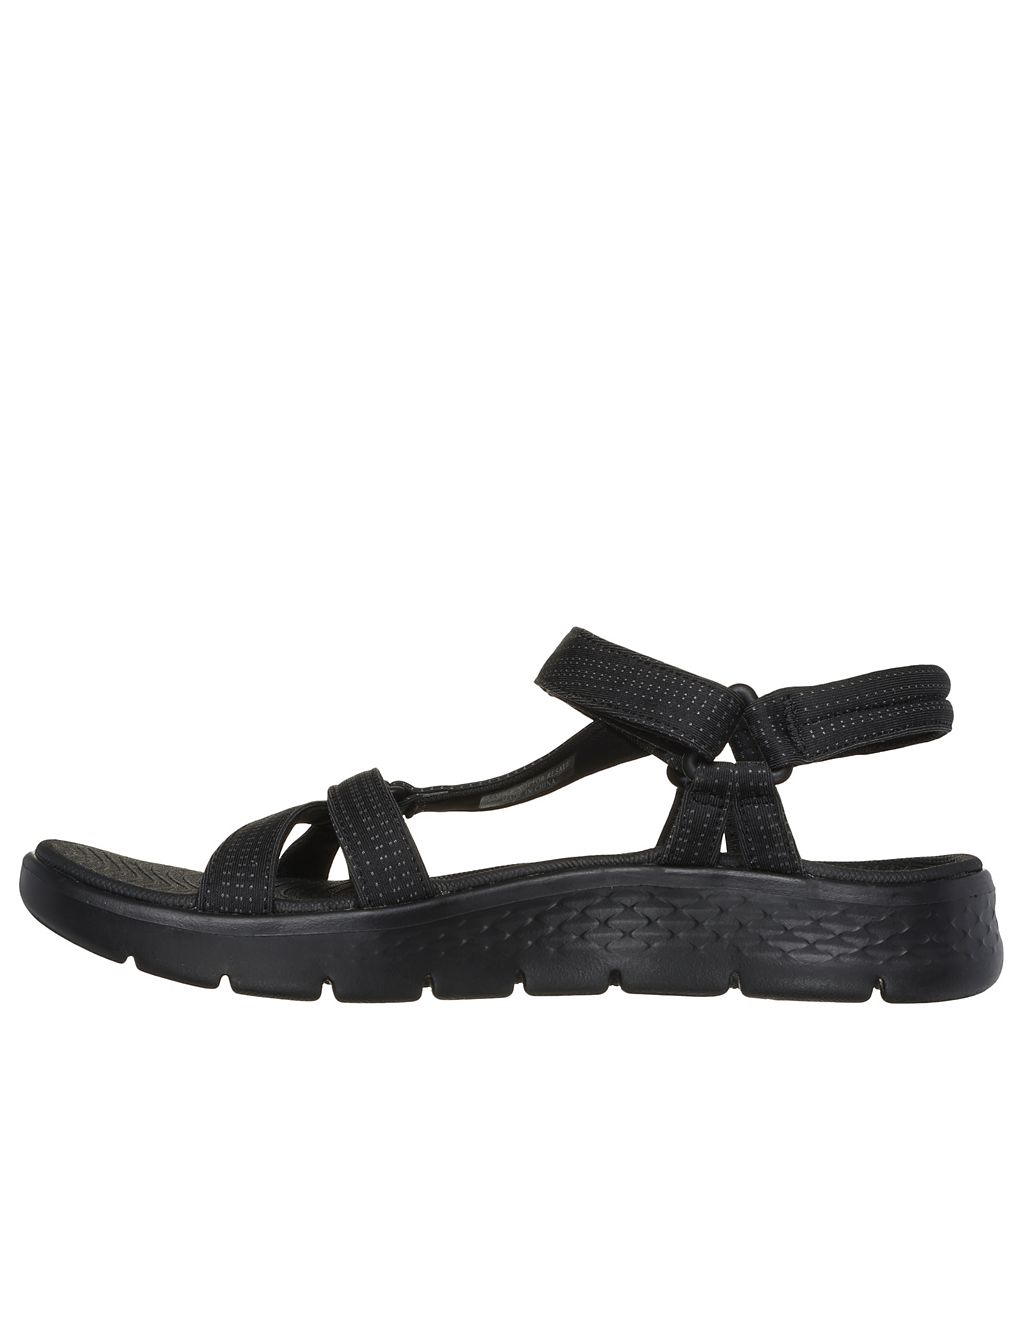 GO WALK® Flex Ankle Strap Flat Sandals 2 of 5